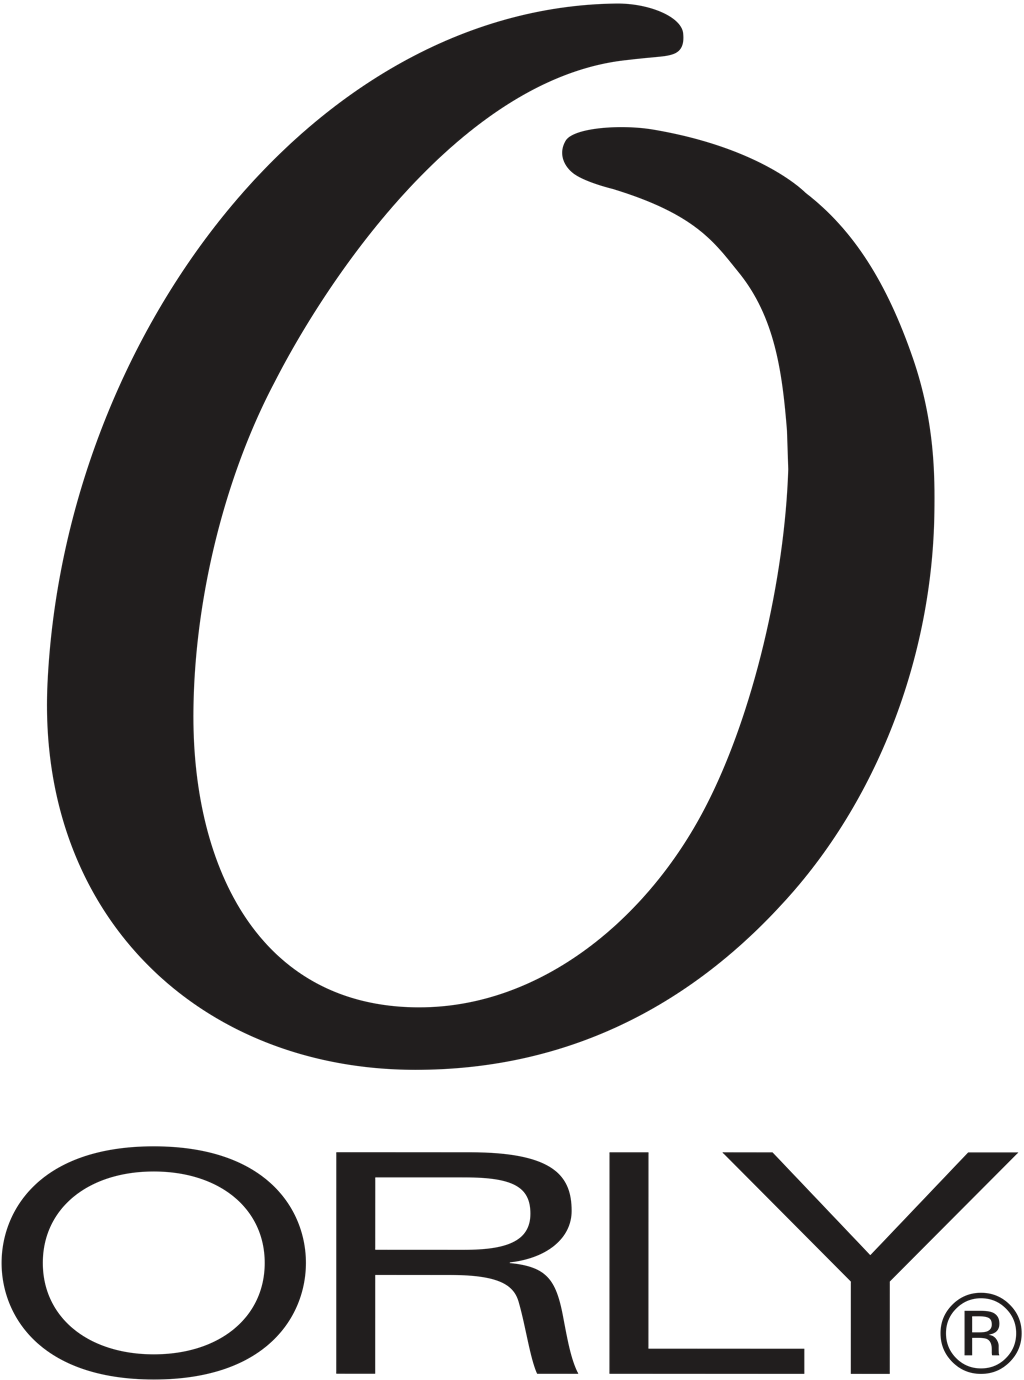 Orly logotype, transparent .png, medium, large